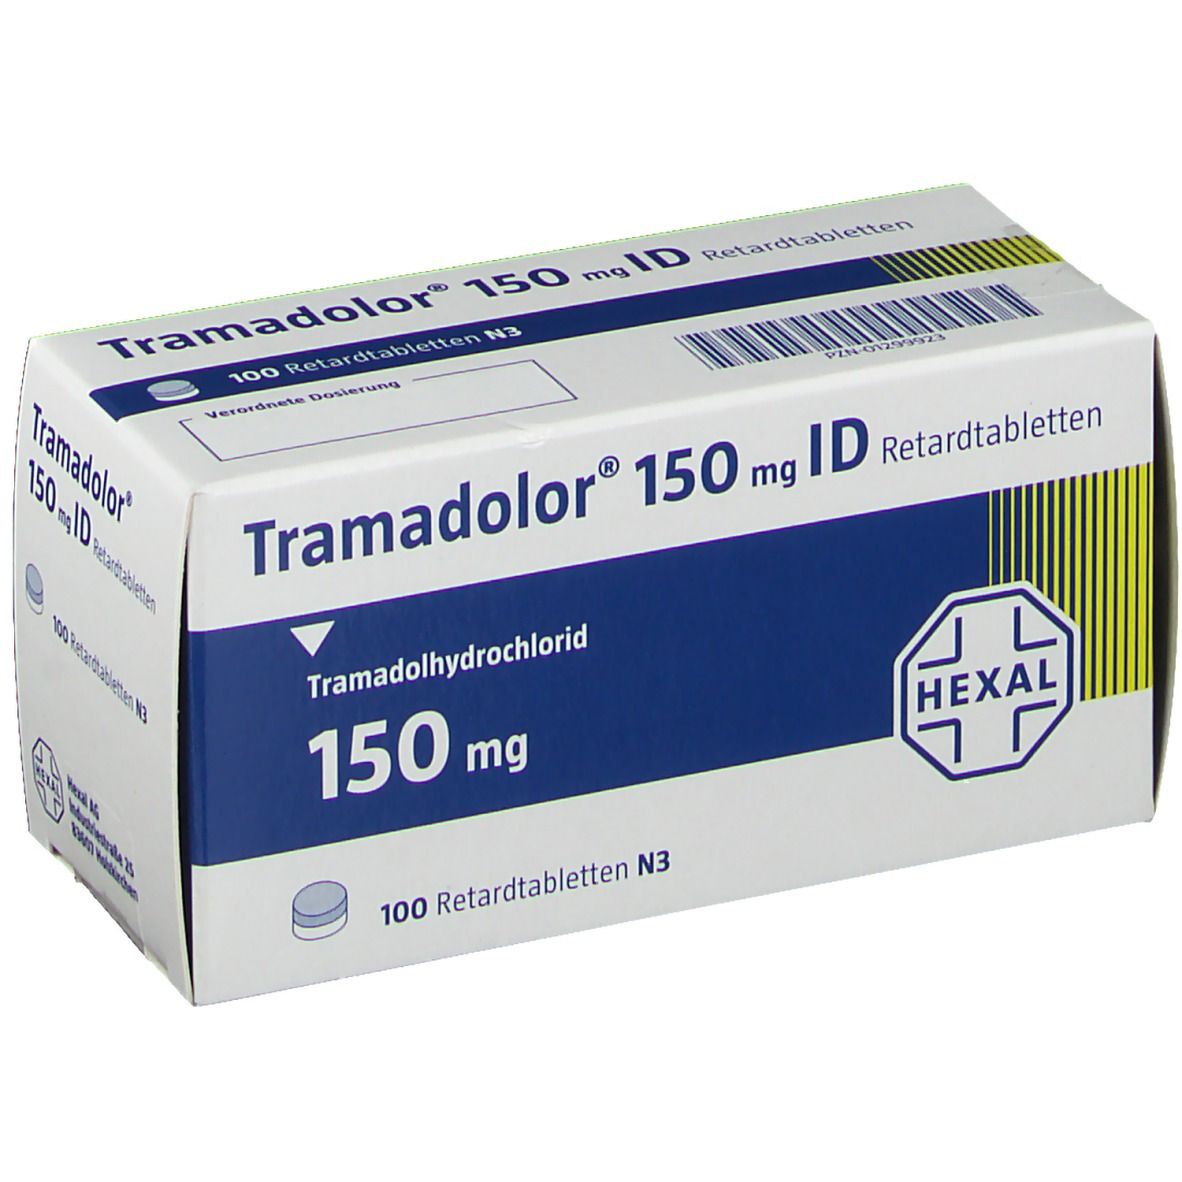 Tramadolor® 150 mg ID